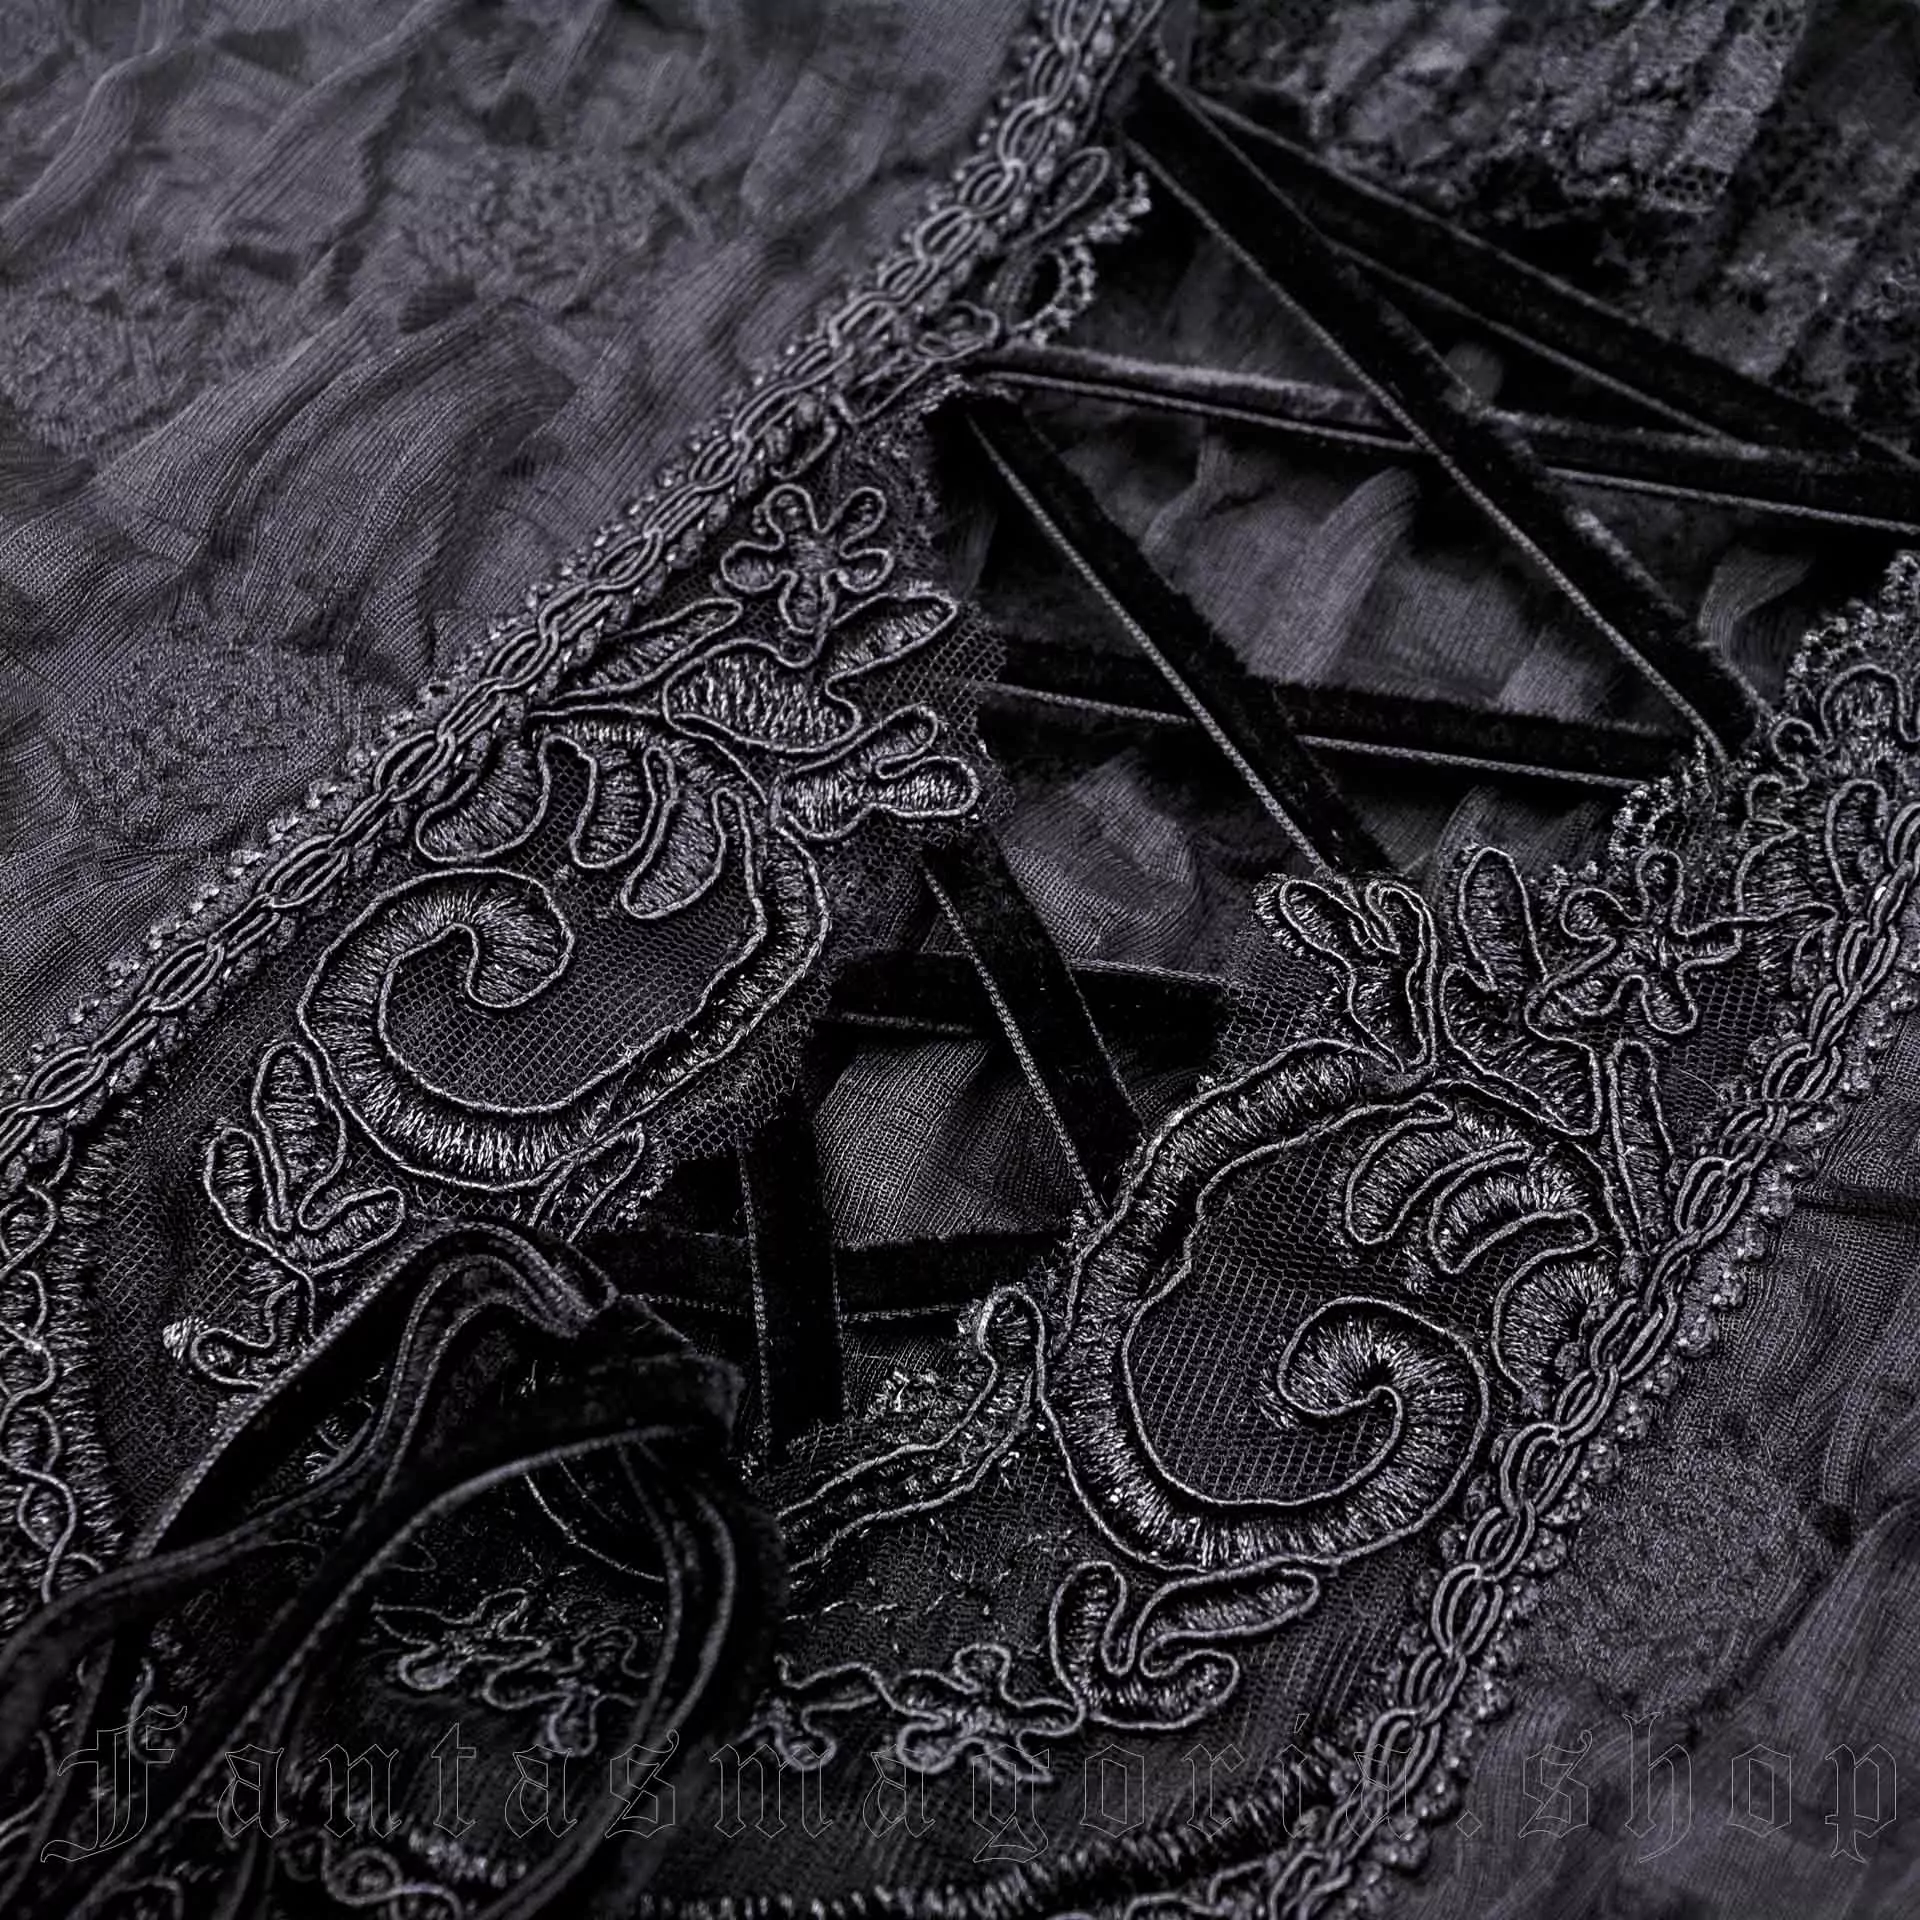 Romantic Gothic black lace high-low hem dress.